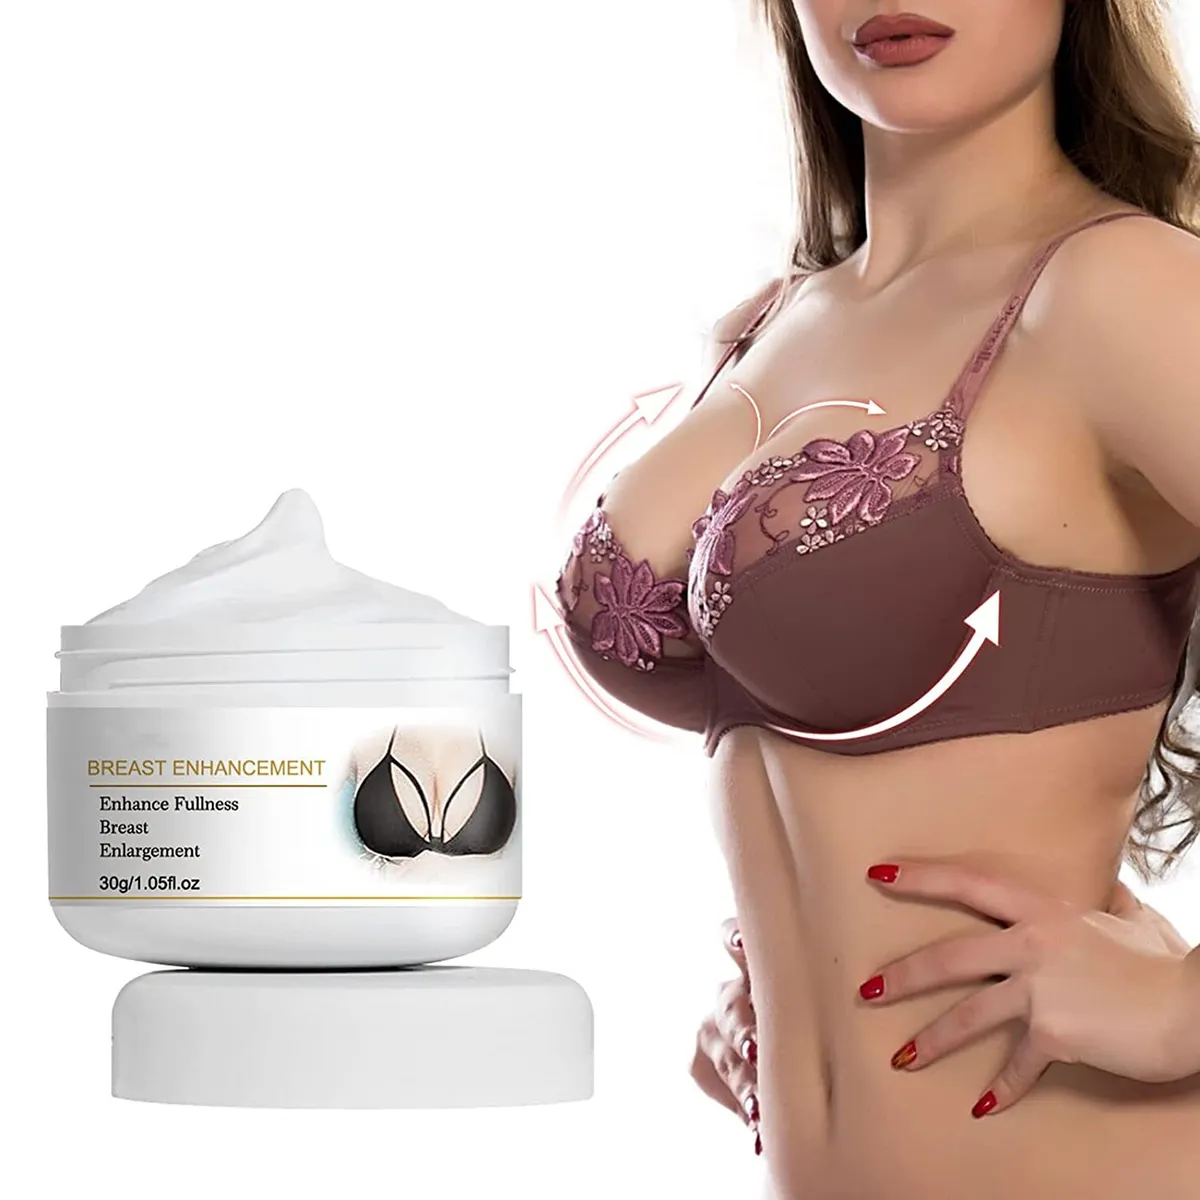 Reshape+ Breast Enhancement Cream eBay photo pic